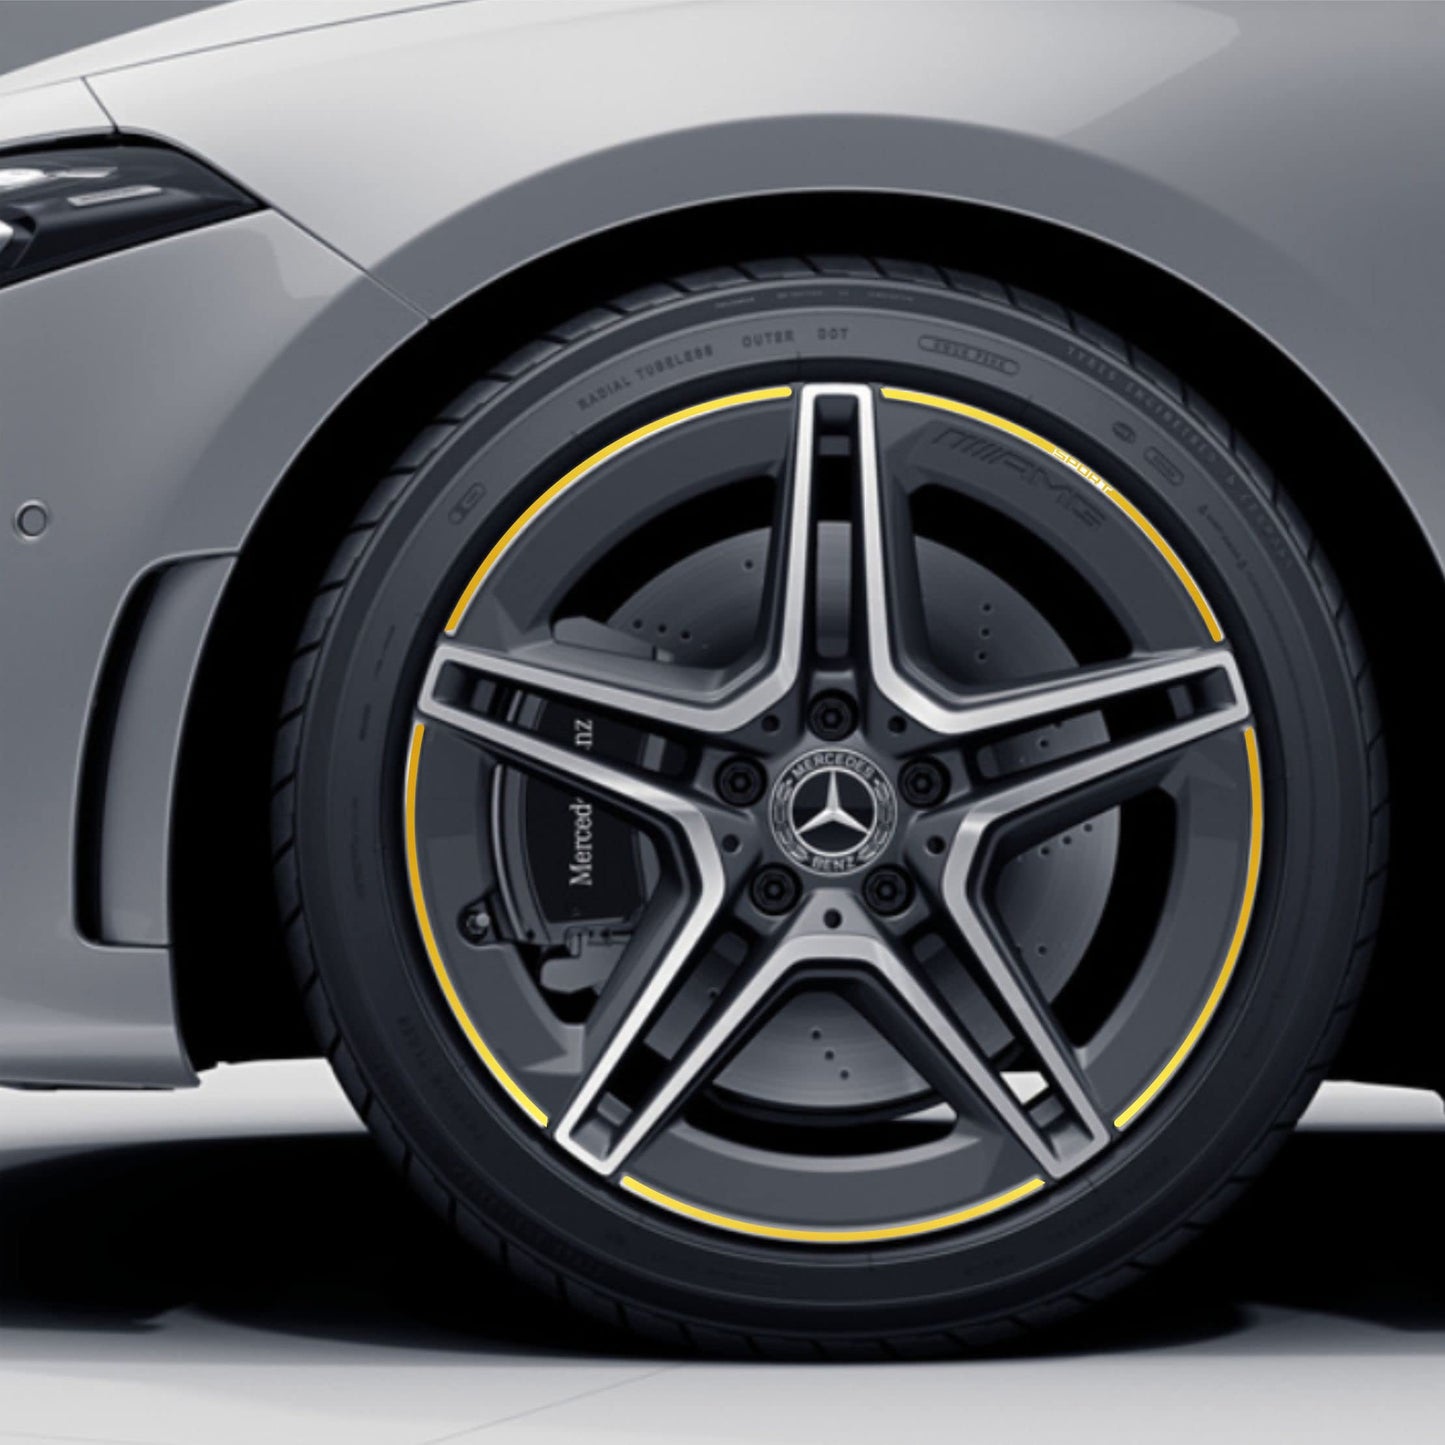 DualColorStampe Adesivi strisce cerchi compatibili con Mercedes-Benz AMG Cerchi in lega 18'' ruota cerchioni strisce stickers adesivi auto sport COD. 0337 a €14.99 solo da DualColorStampe